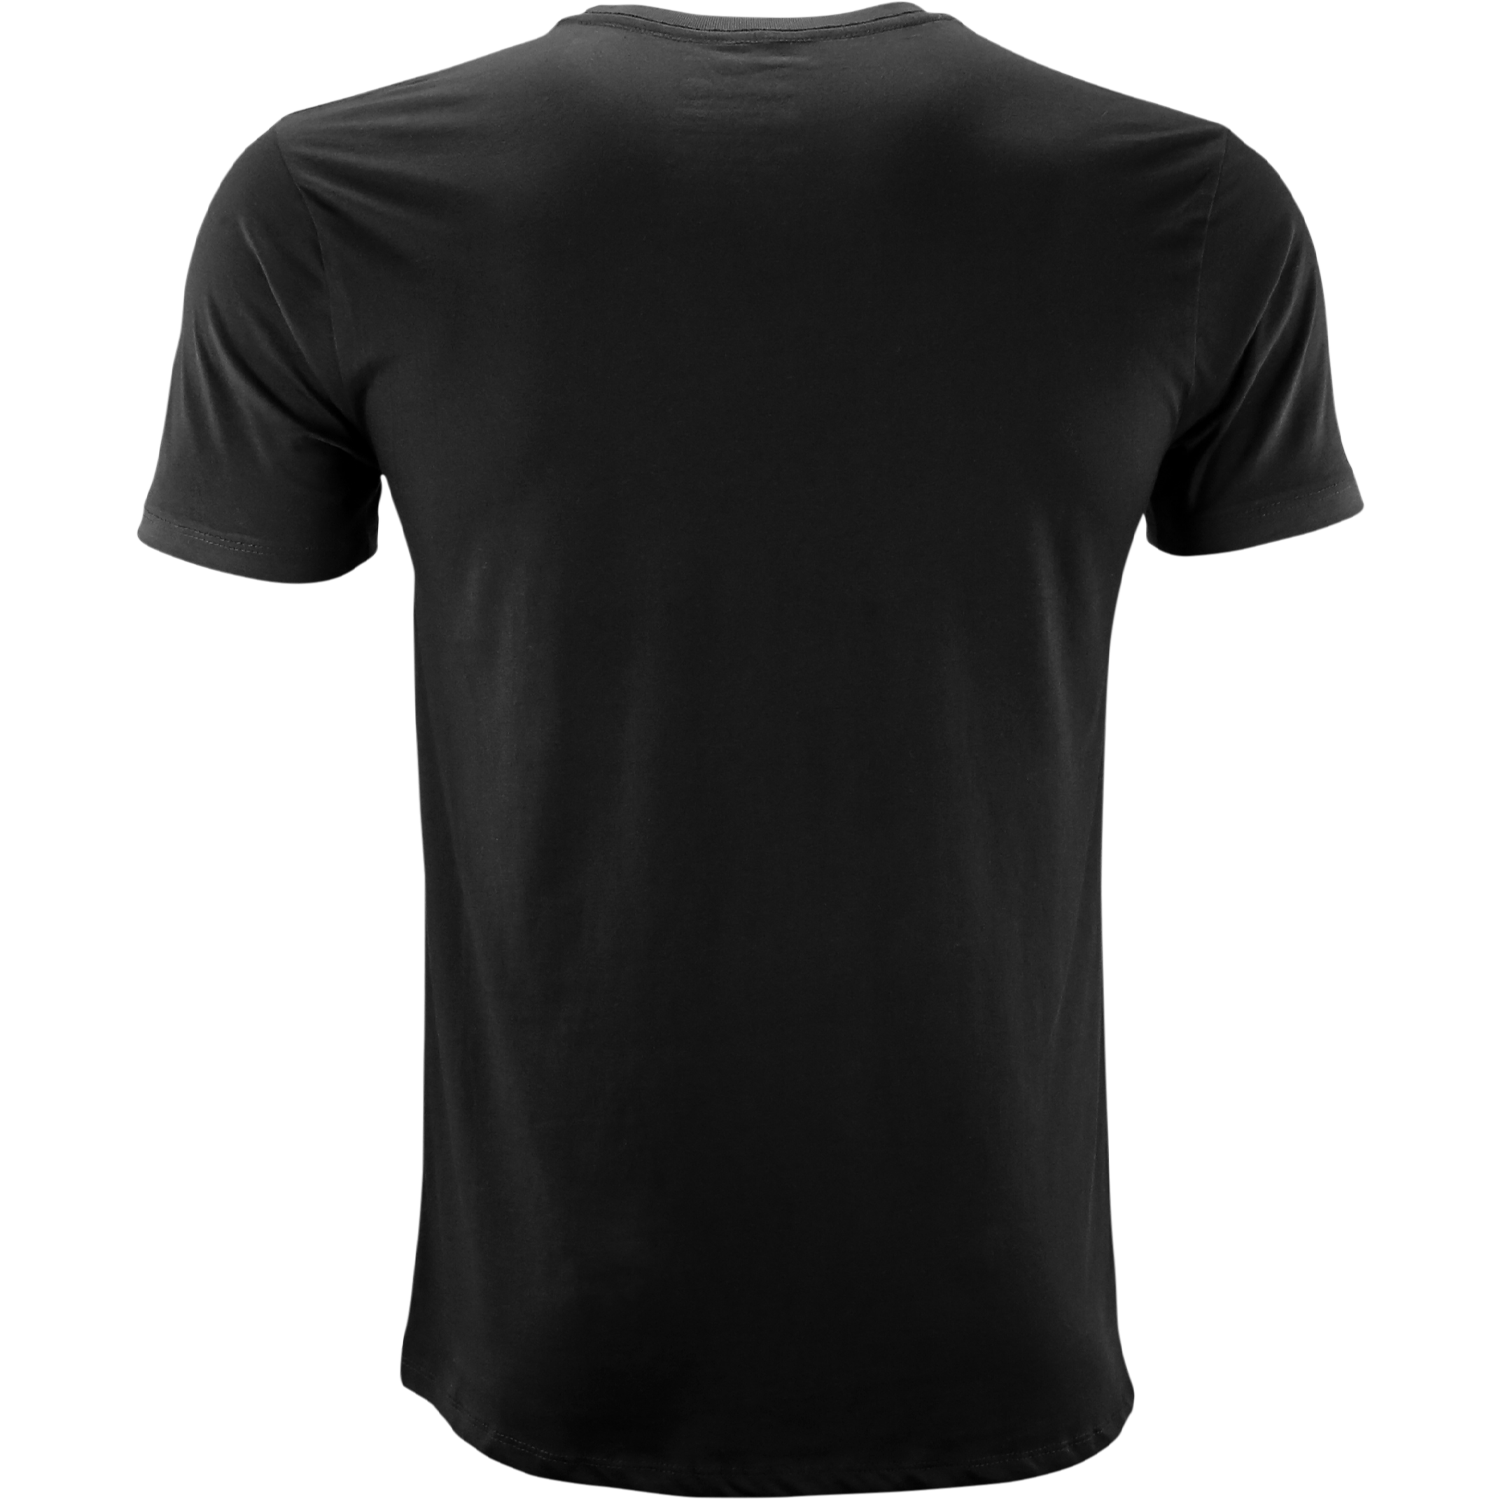 5 Percent, Black T-Shirt - 5% Nutrition